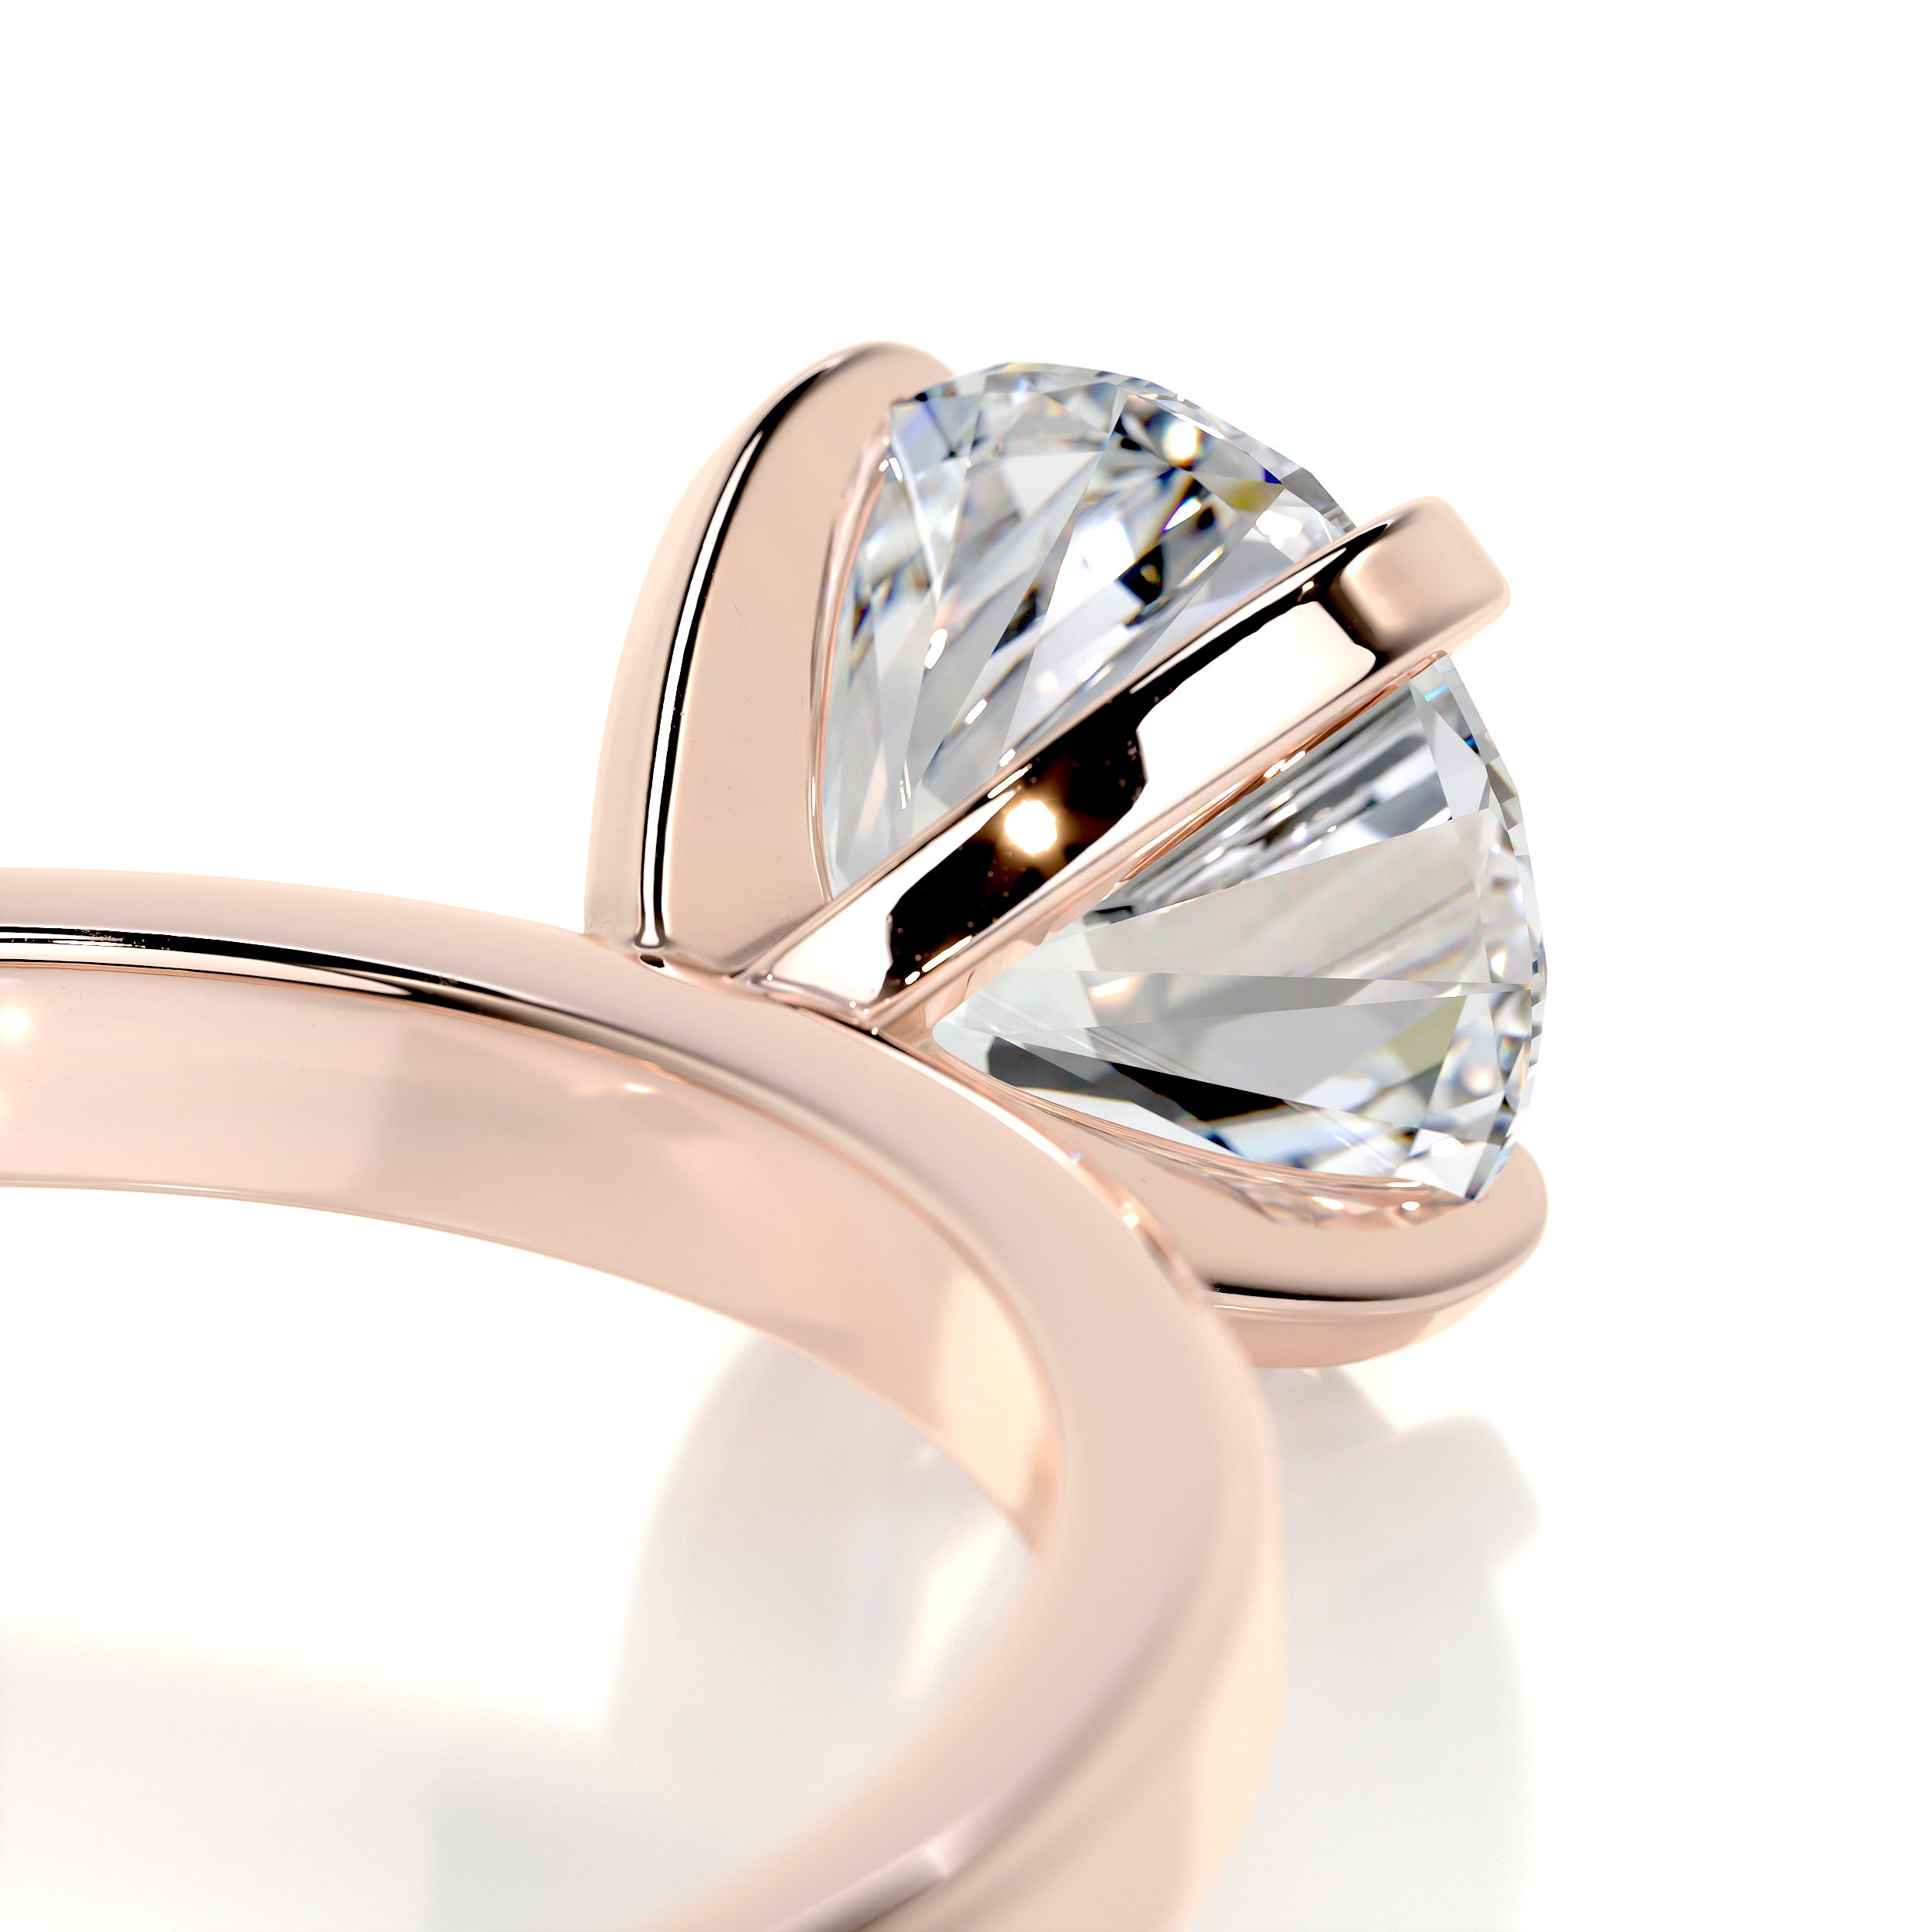 Jessica Diamond Engagement Ring   (1 Carat) -14K Rose Gold